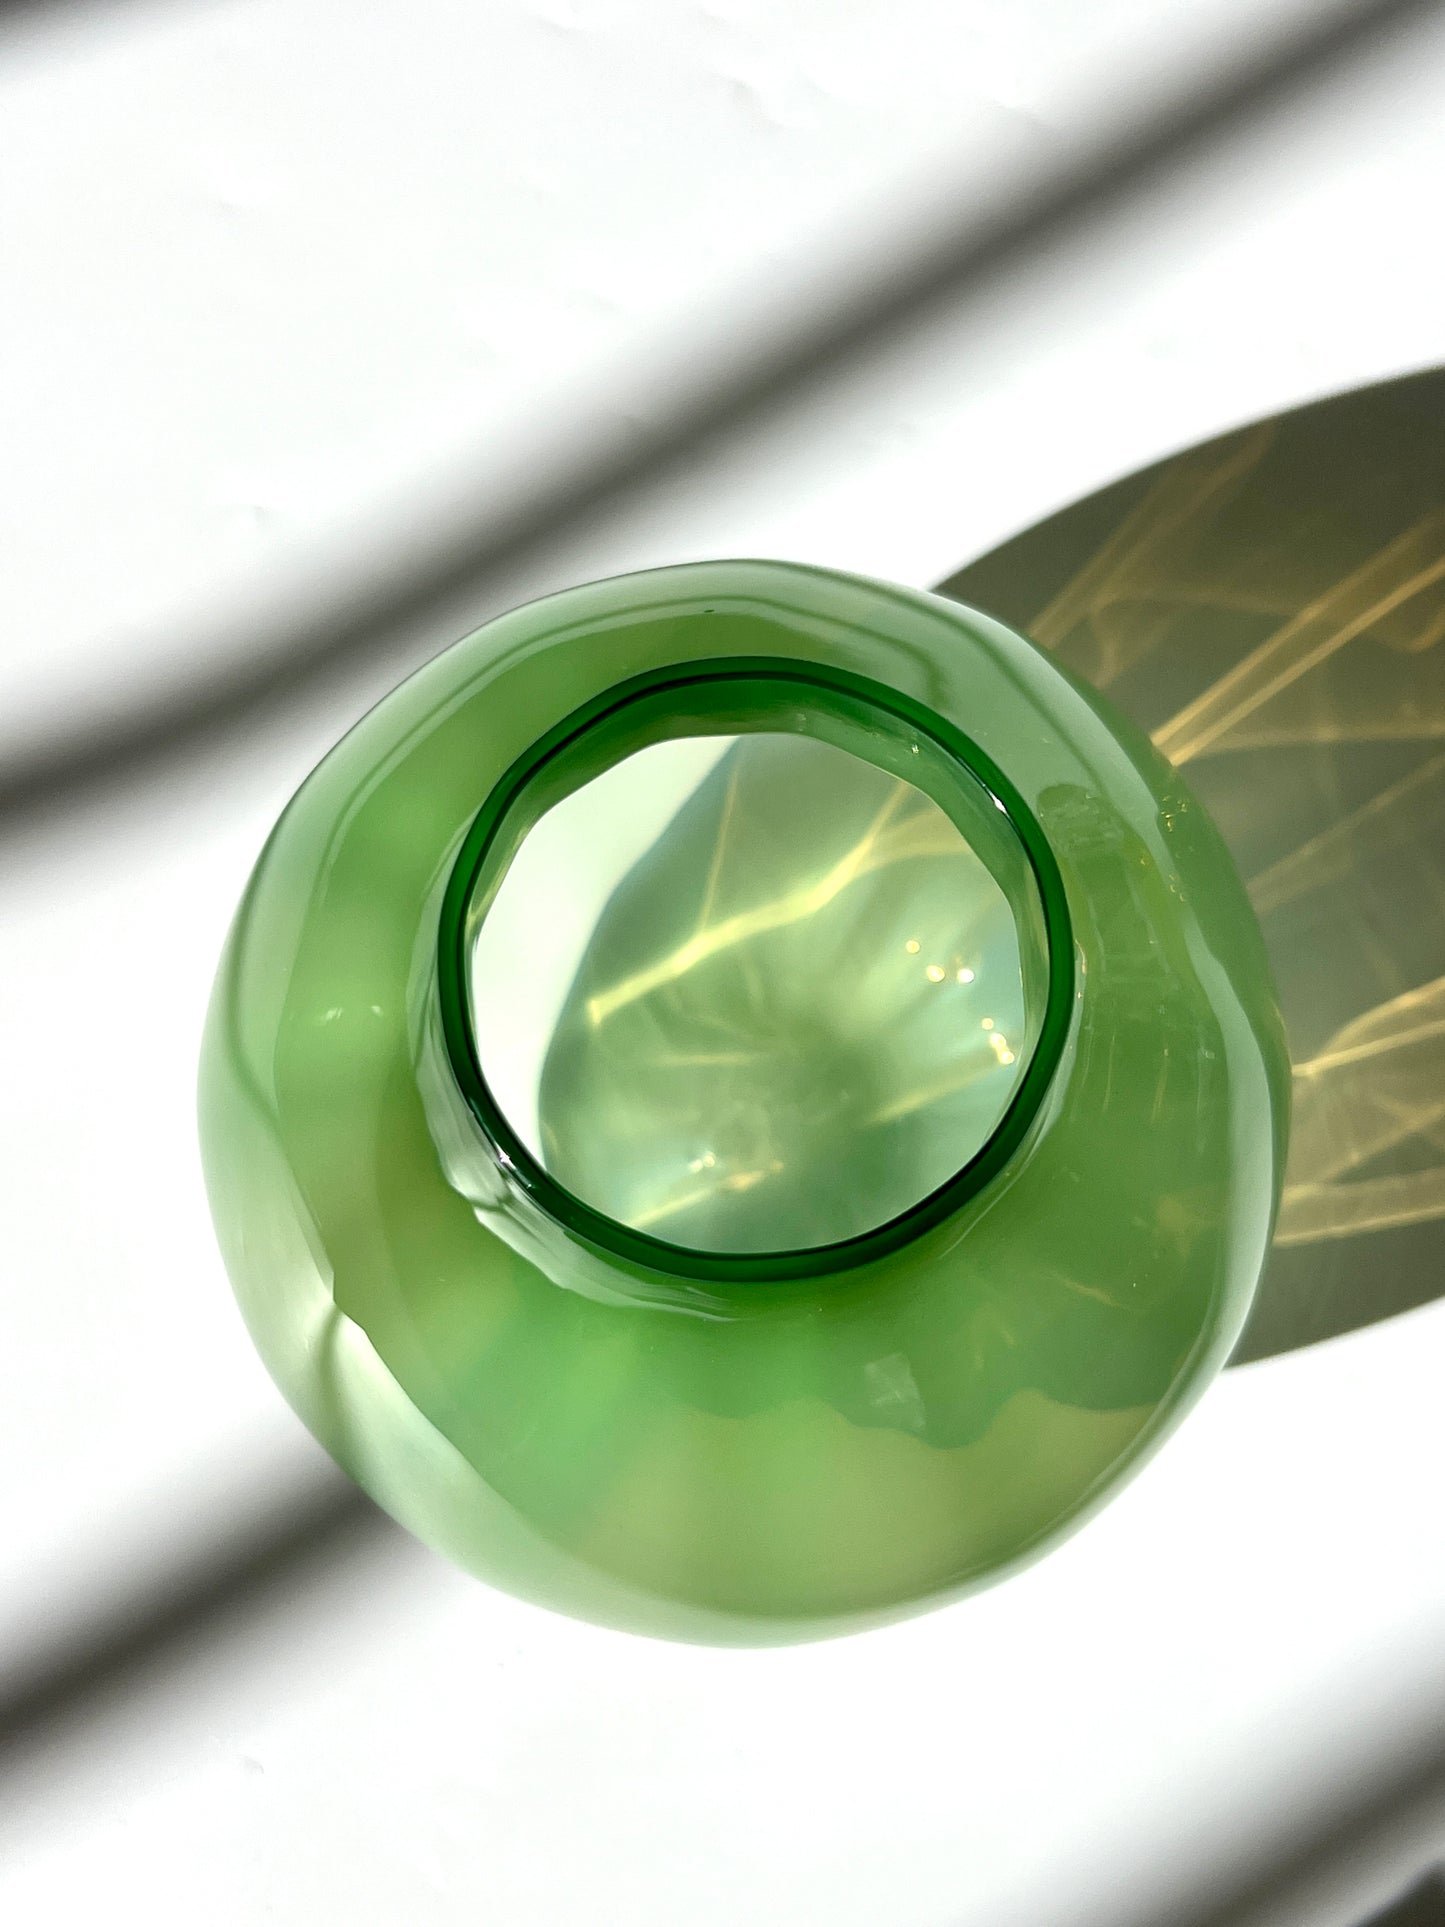 Handblown Glass "Dodici" Vase - British Racing Green